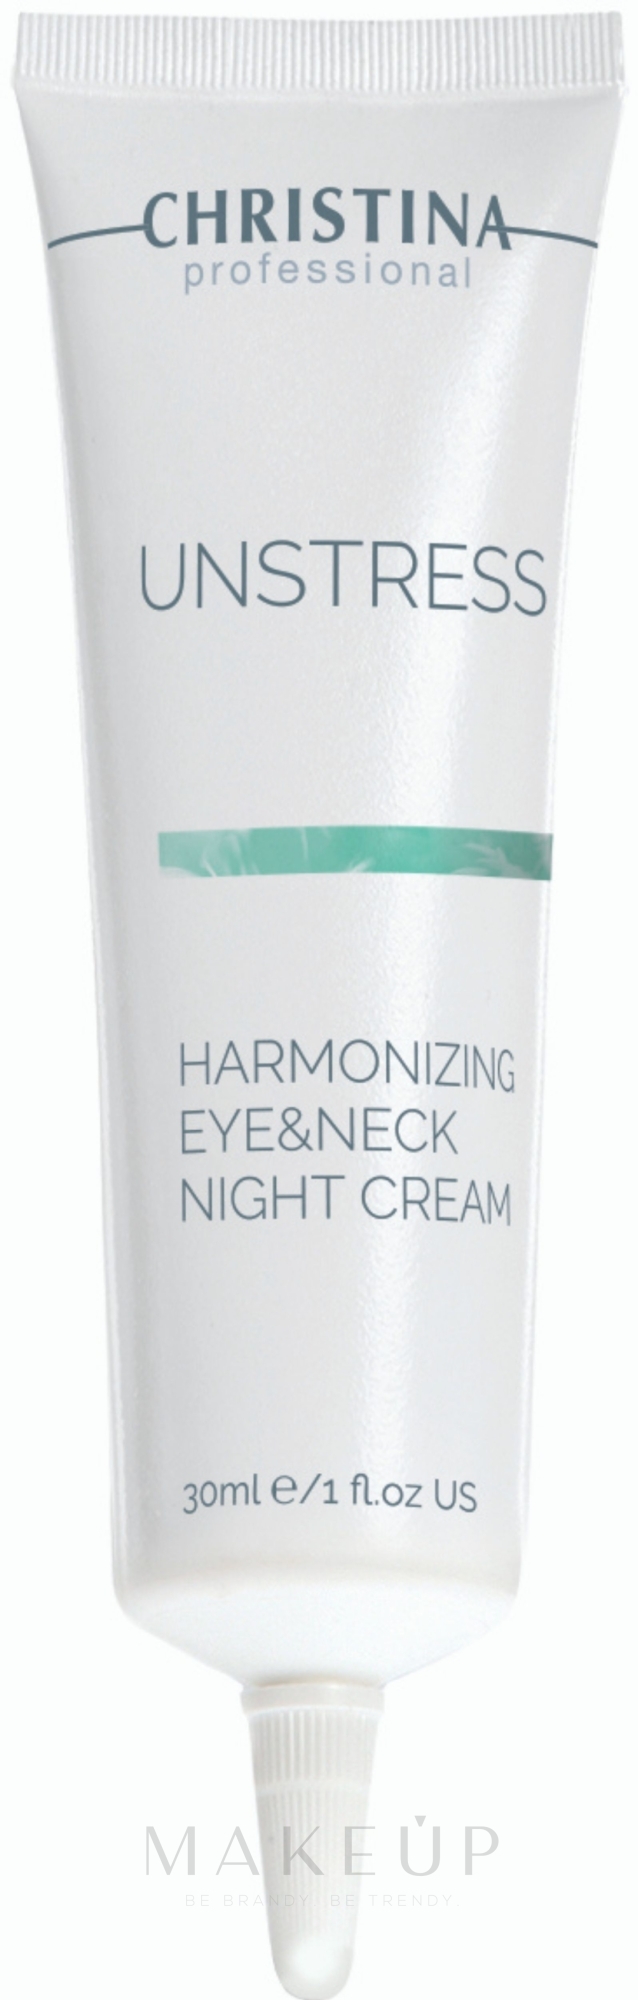 Harmonisierende Augen & Hals Nachtcreme - Christina Unstress Harmonizing Night Cream For Eye And Neck — Foto 30 ml